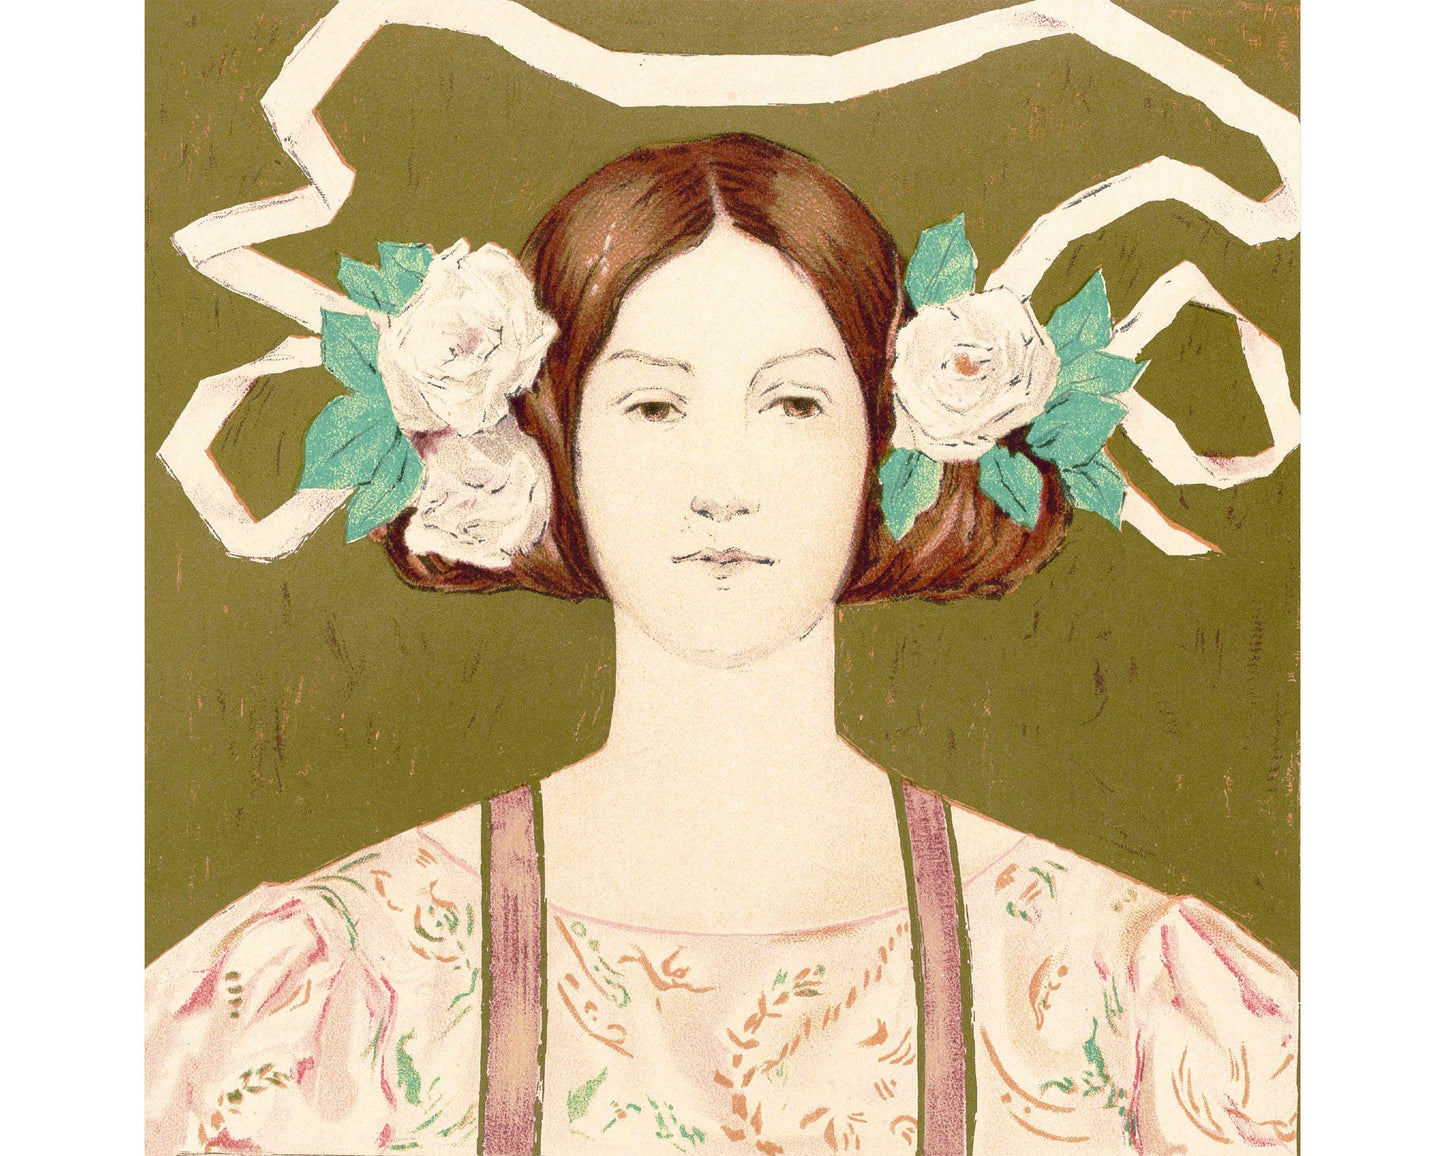 Art nouveau woman with flowers | Fine art print | Feminine art print | Vintage portrait wall art | Female artist | American painter